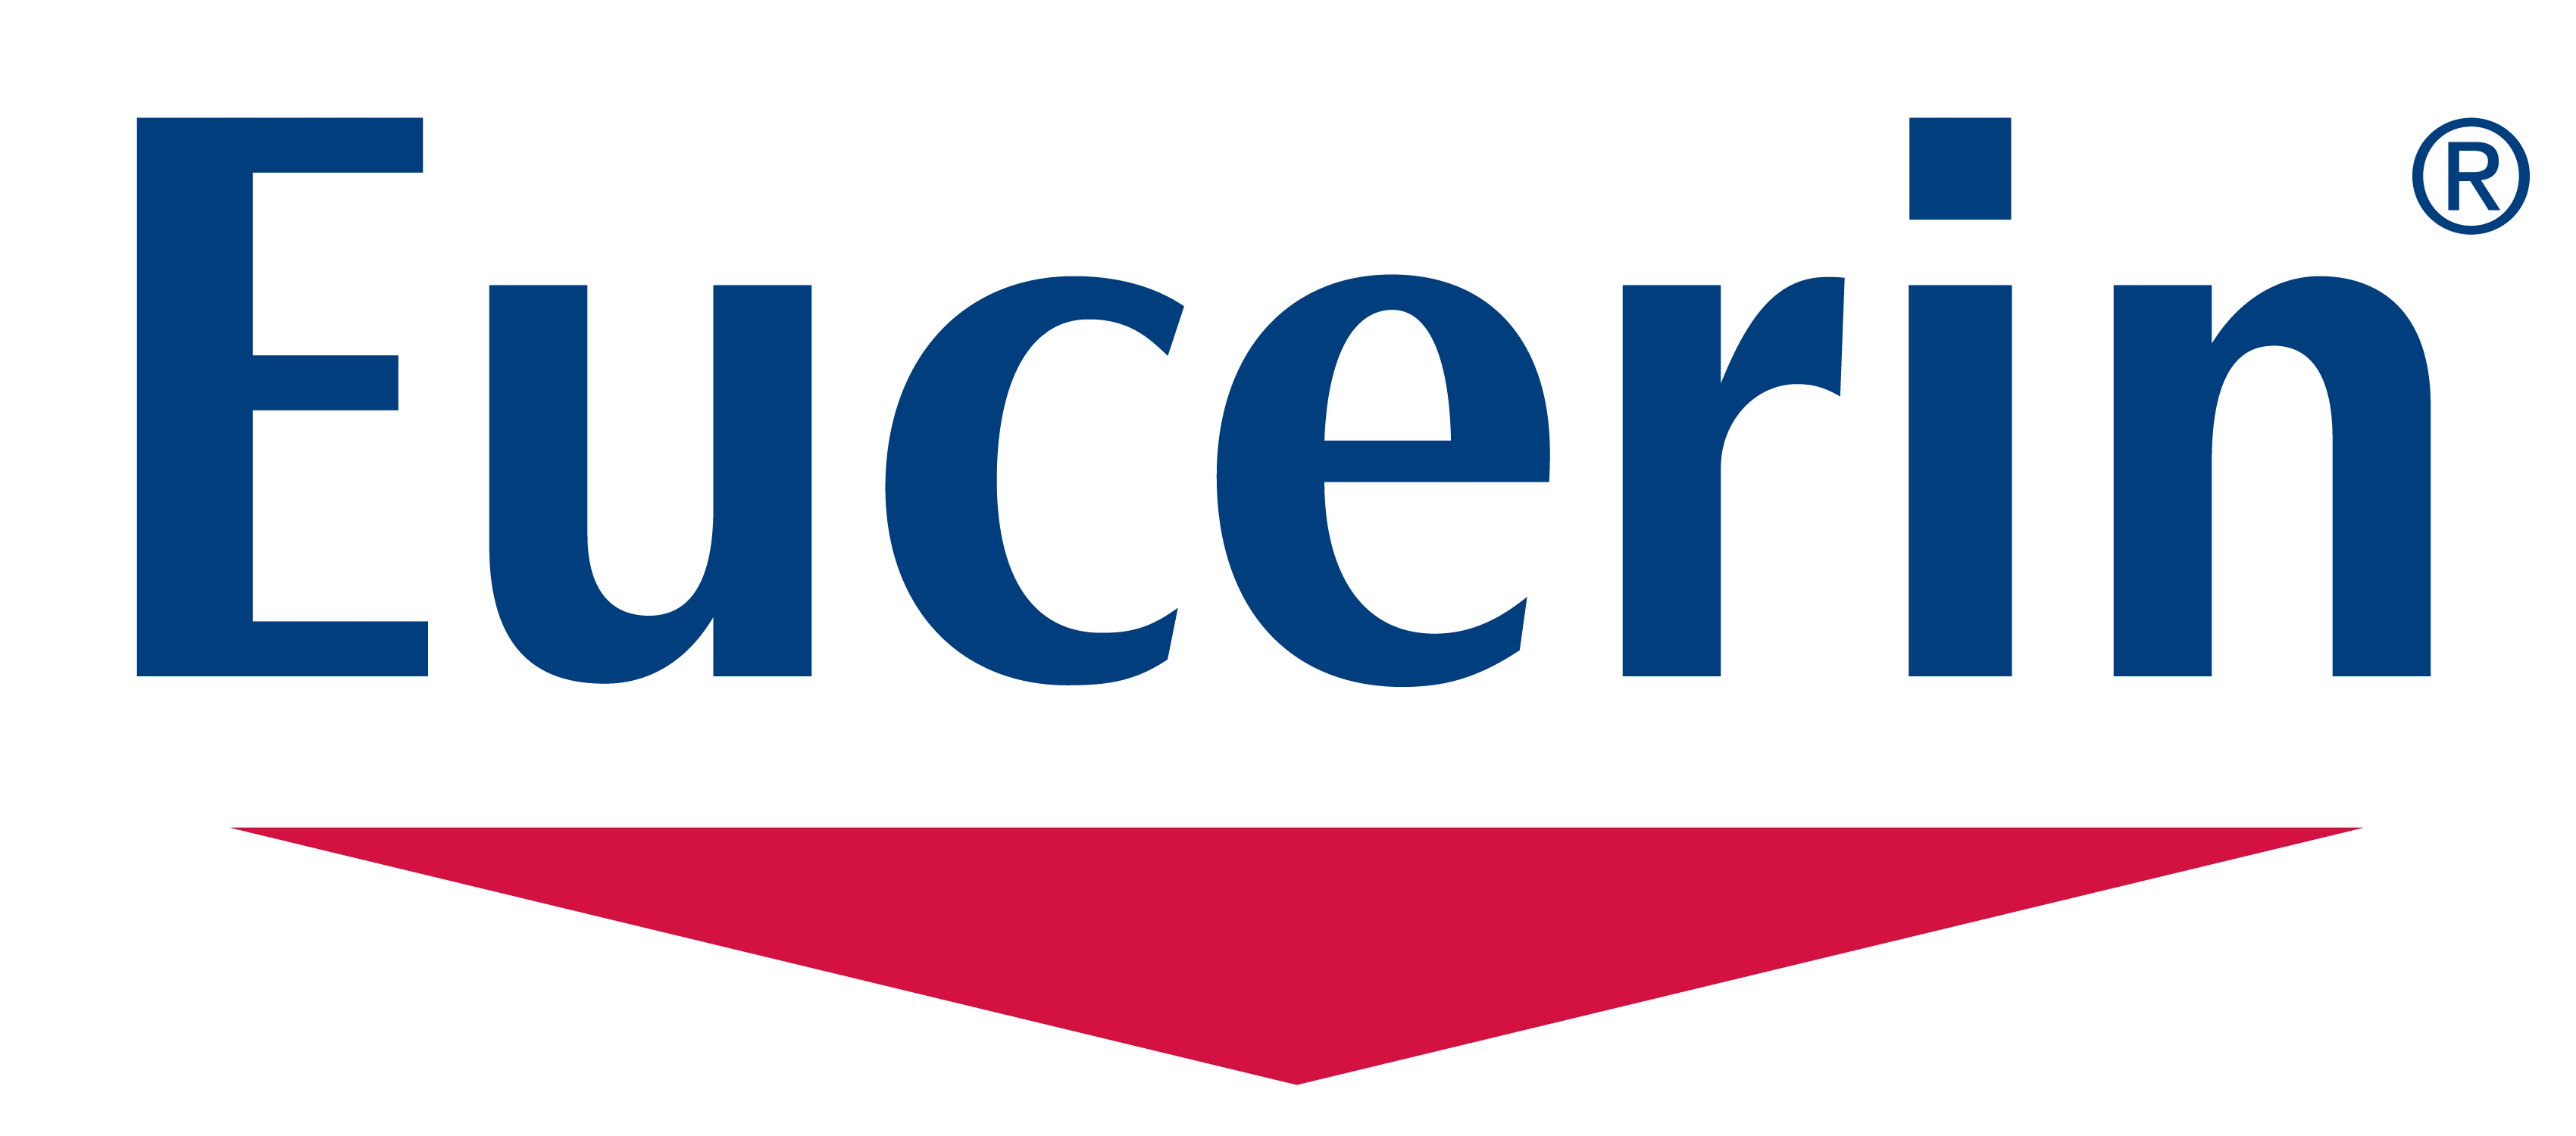 Eucerin – Logos Download